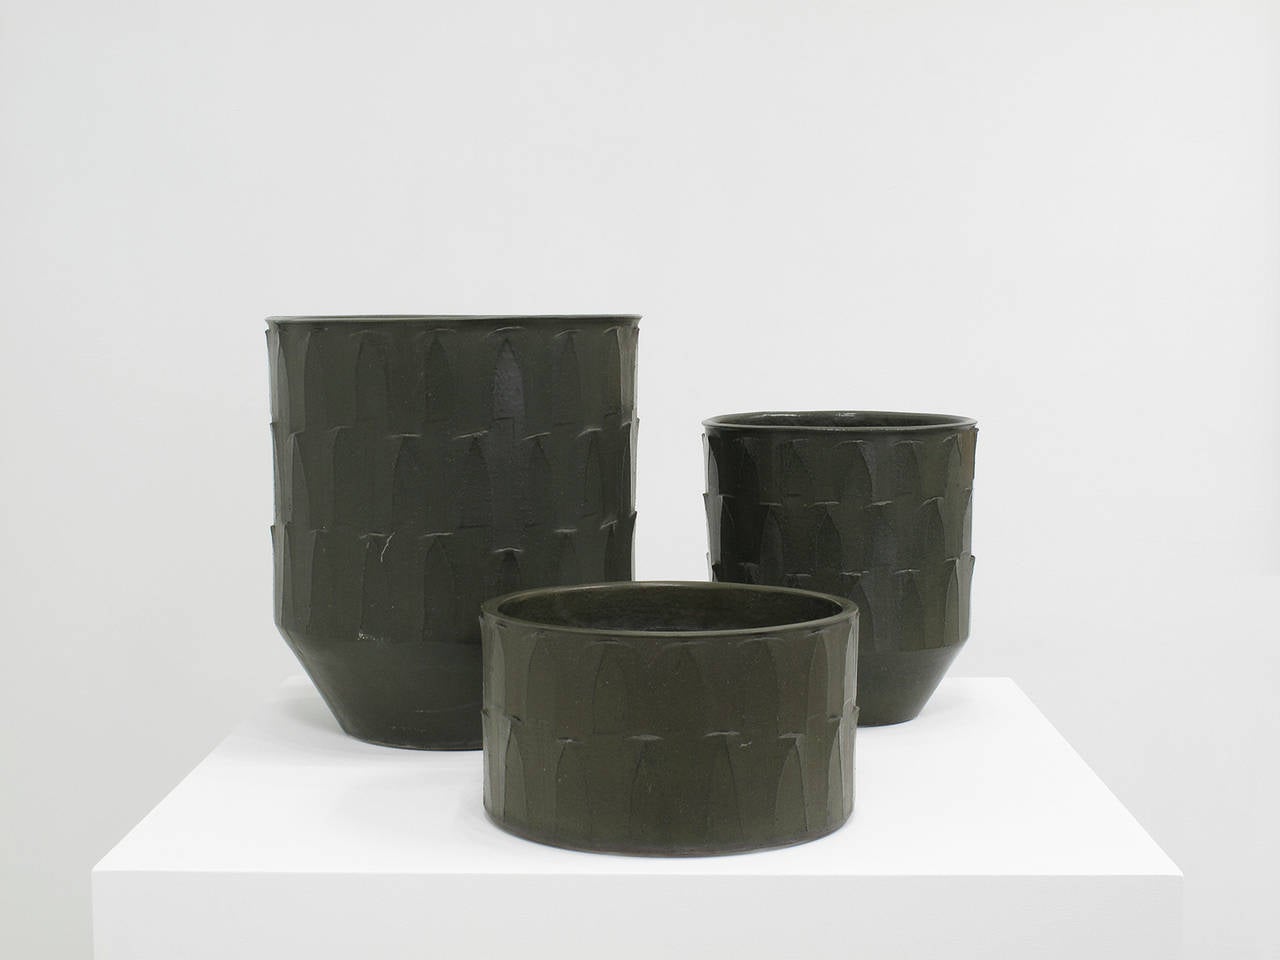 American David Cressey Ceramic Planters, 'Ribbed' Design, 1960s